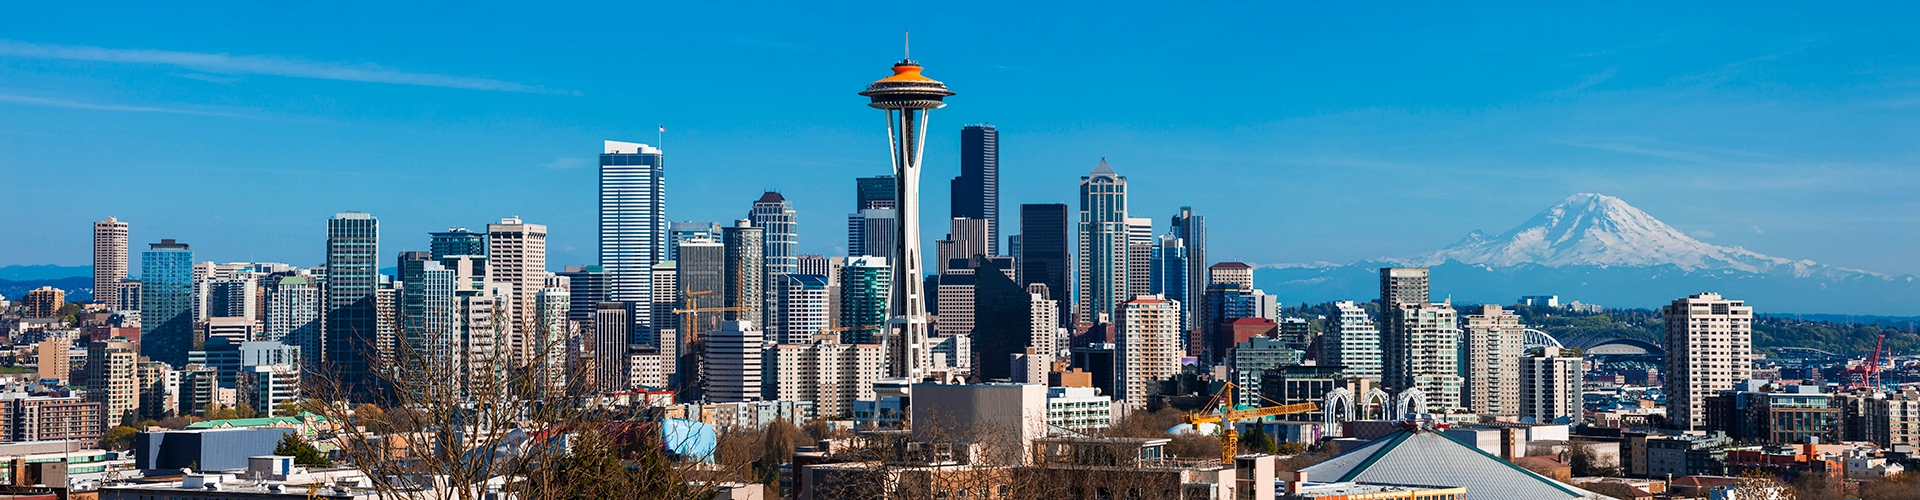 Header Image of Seattle